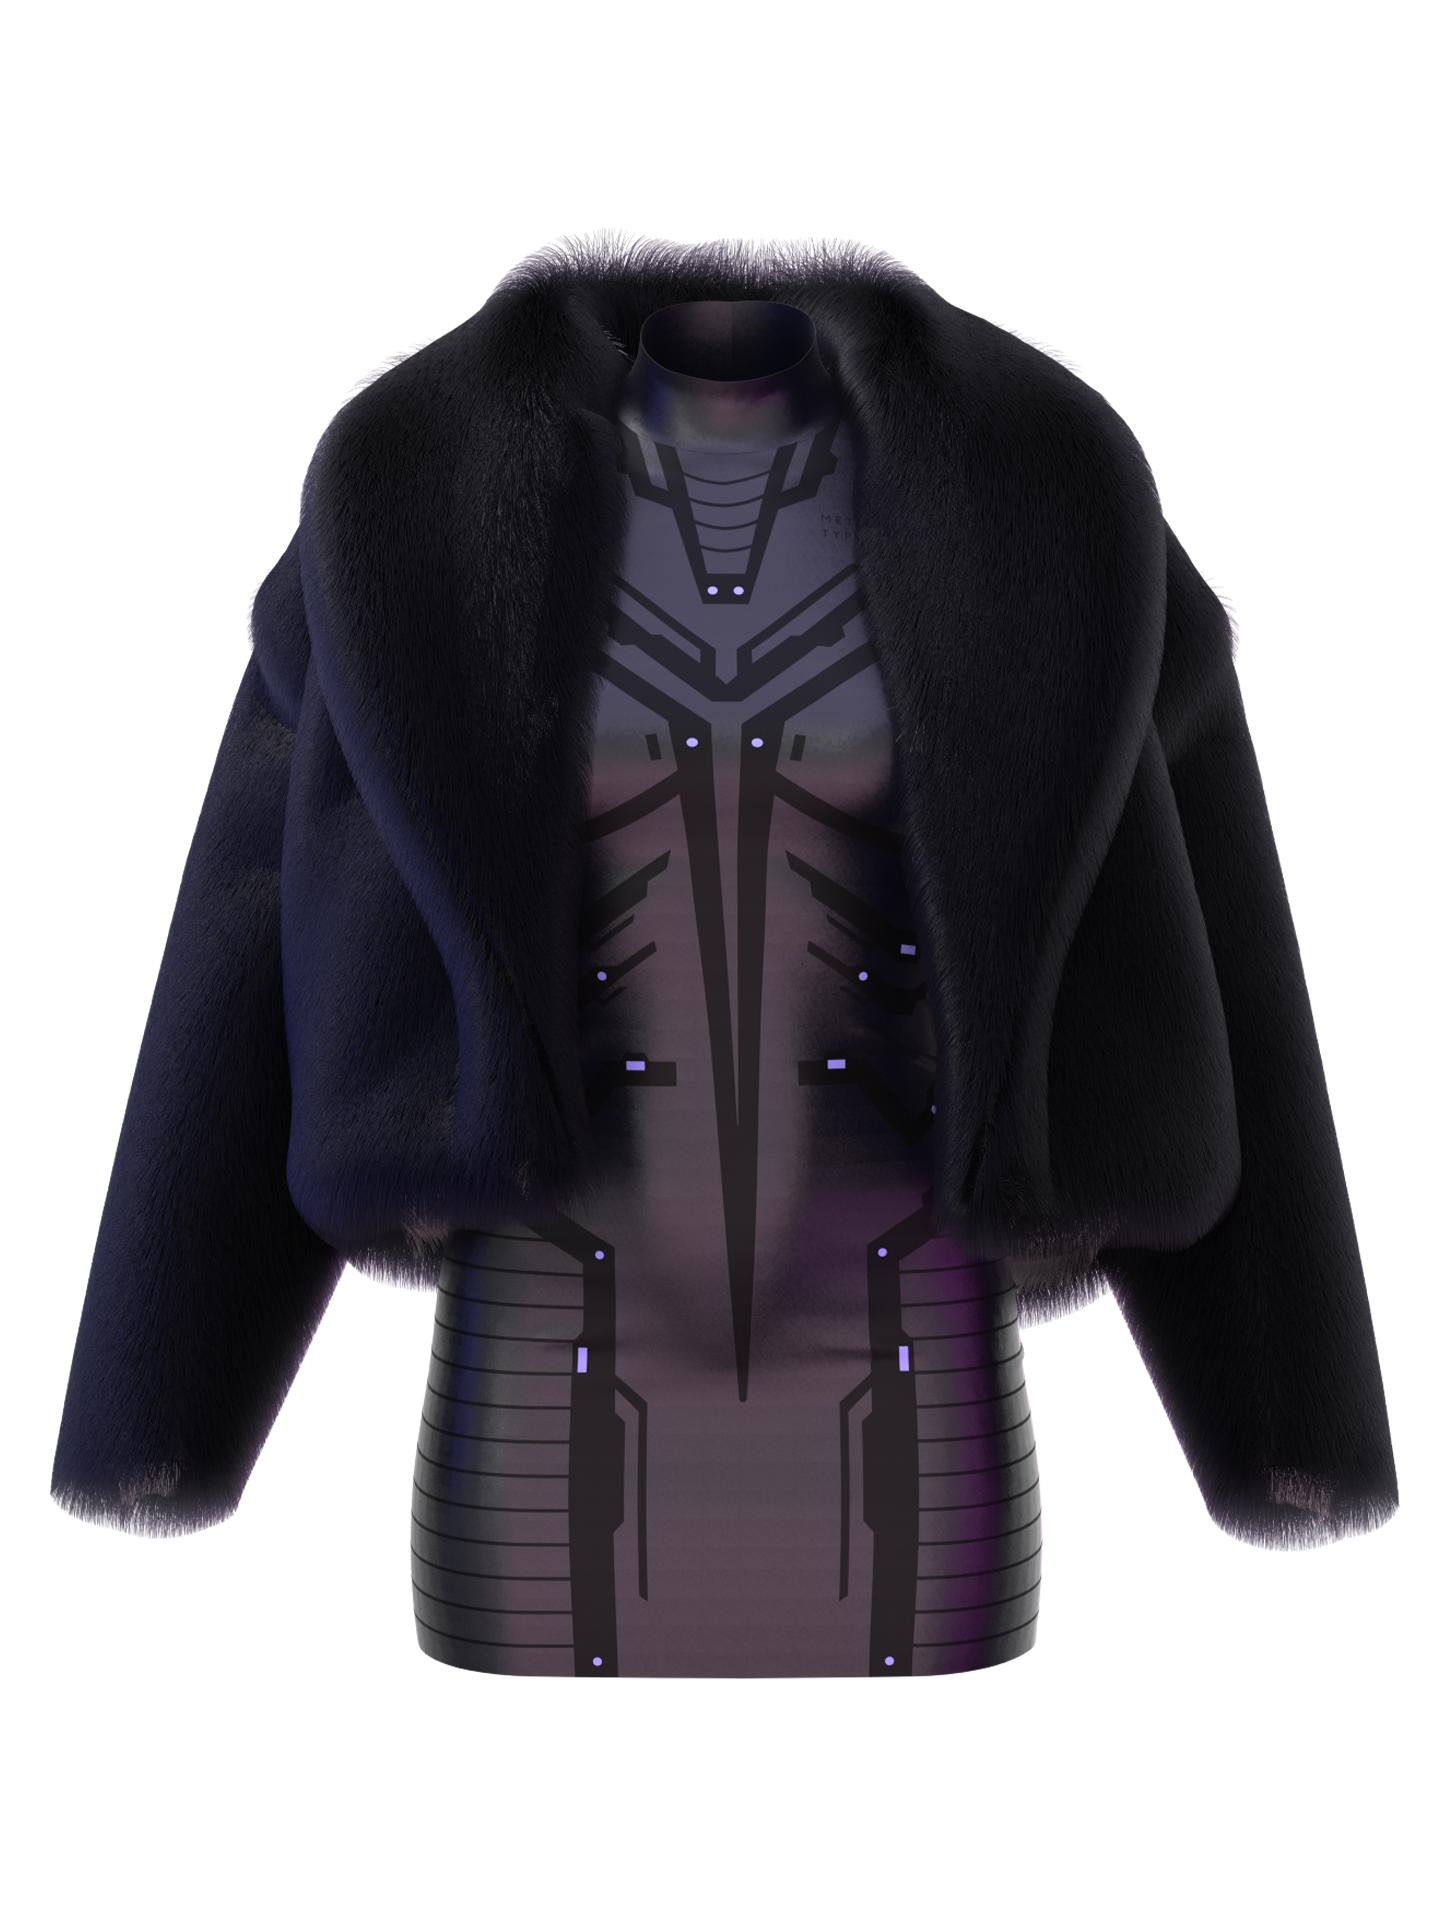 MECHA Fur Coat + Dress Black by METANEON